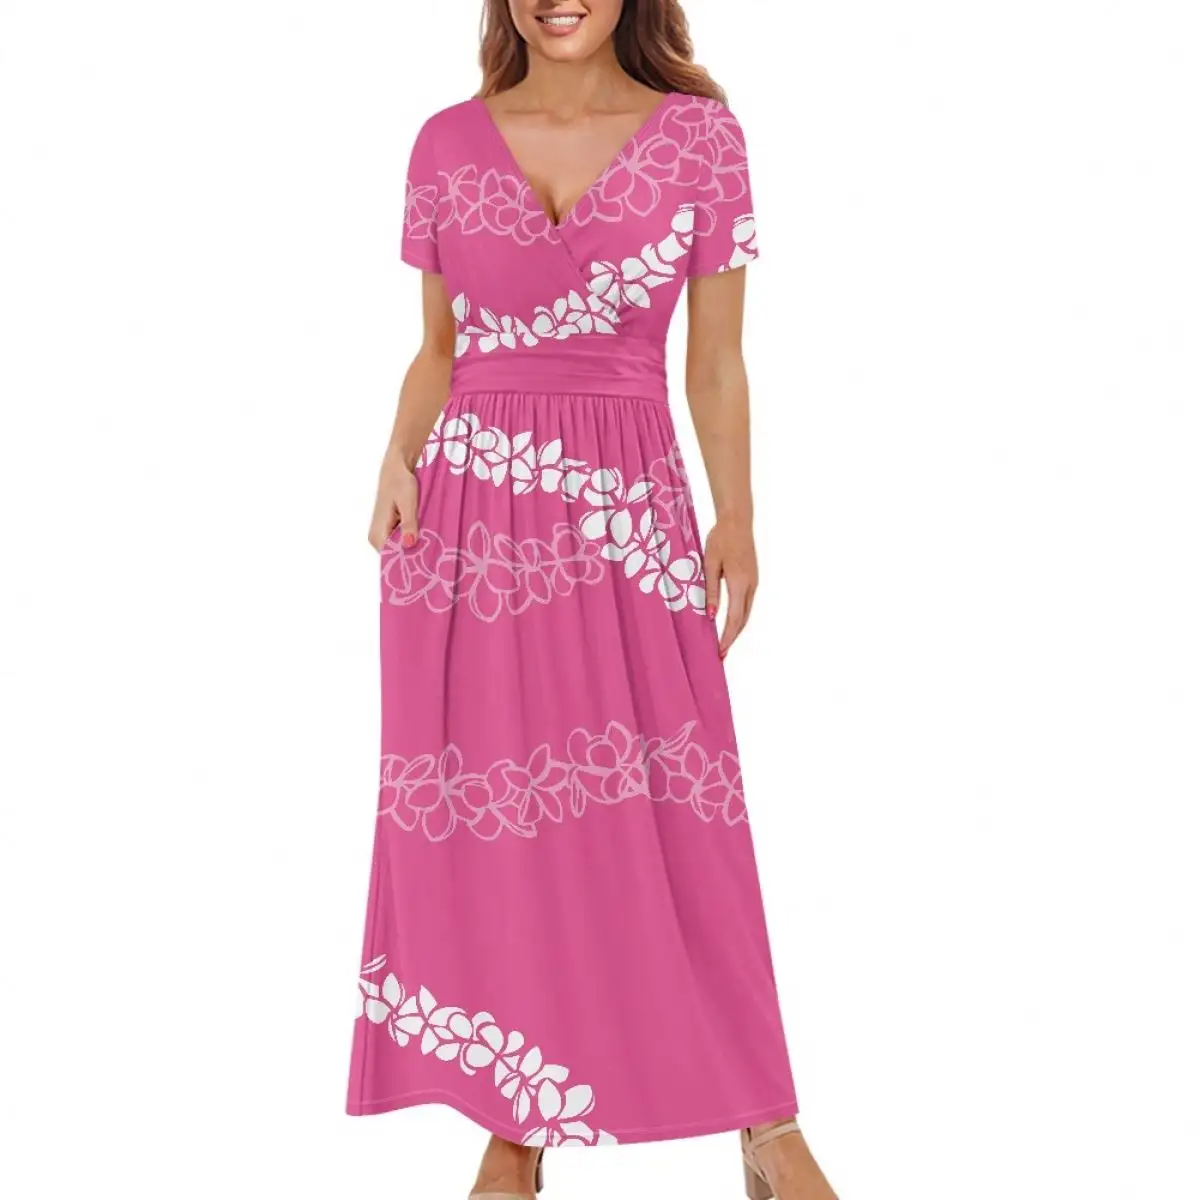 Puakenikeni ساموان هاواي فستان برقبة على شكل حرف V مزهر شركة مصنعة احترافية أزياء نسائية ملابس للحفلات والتسامي فستان سهرة